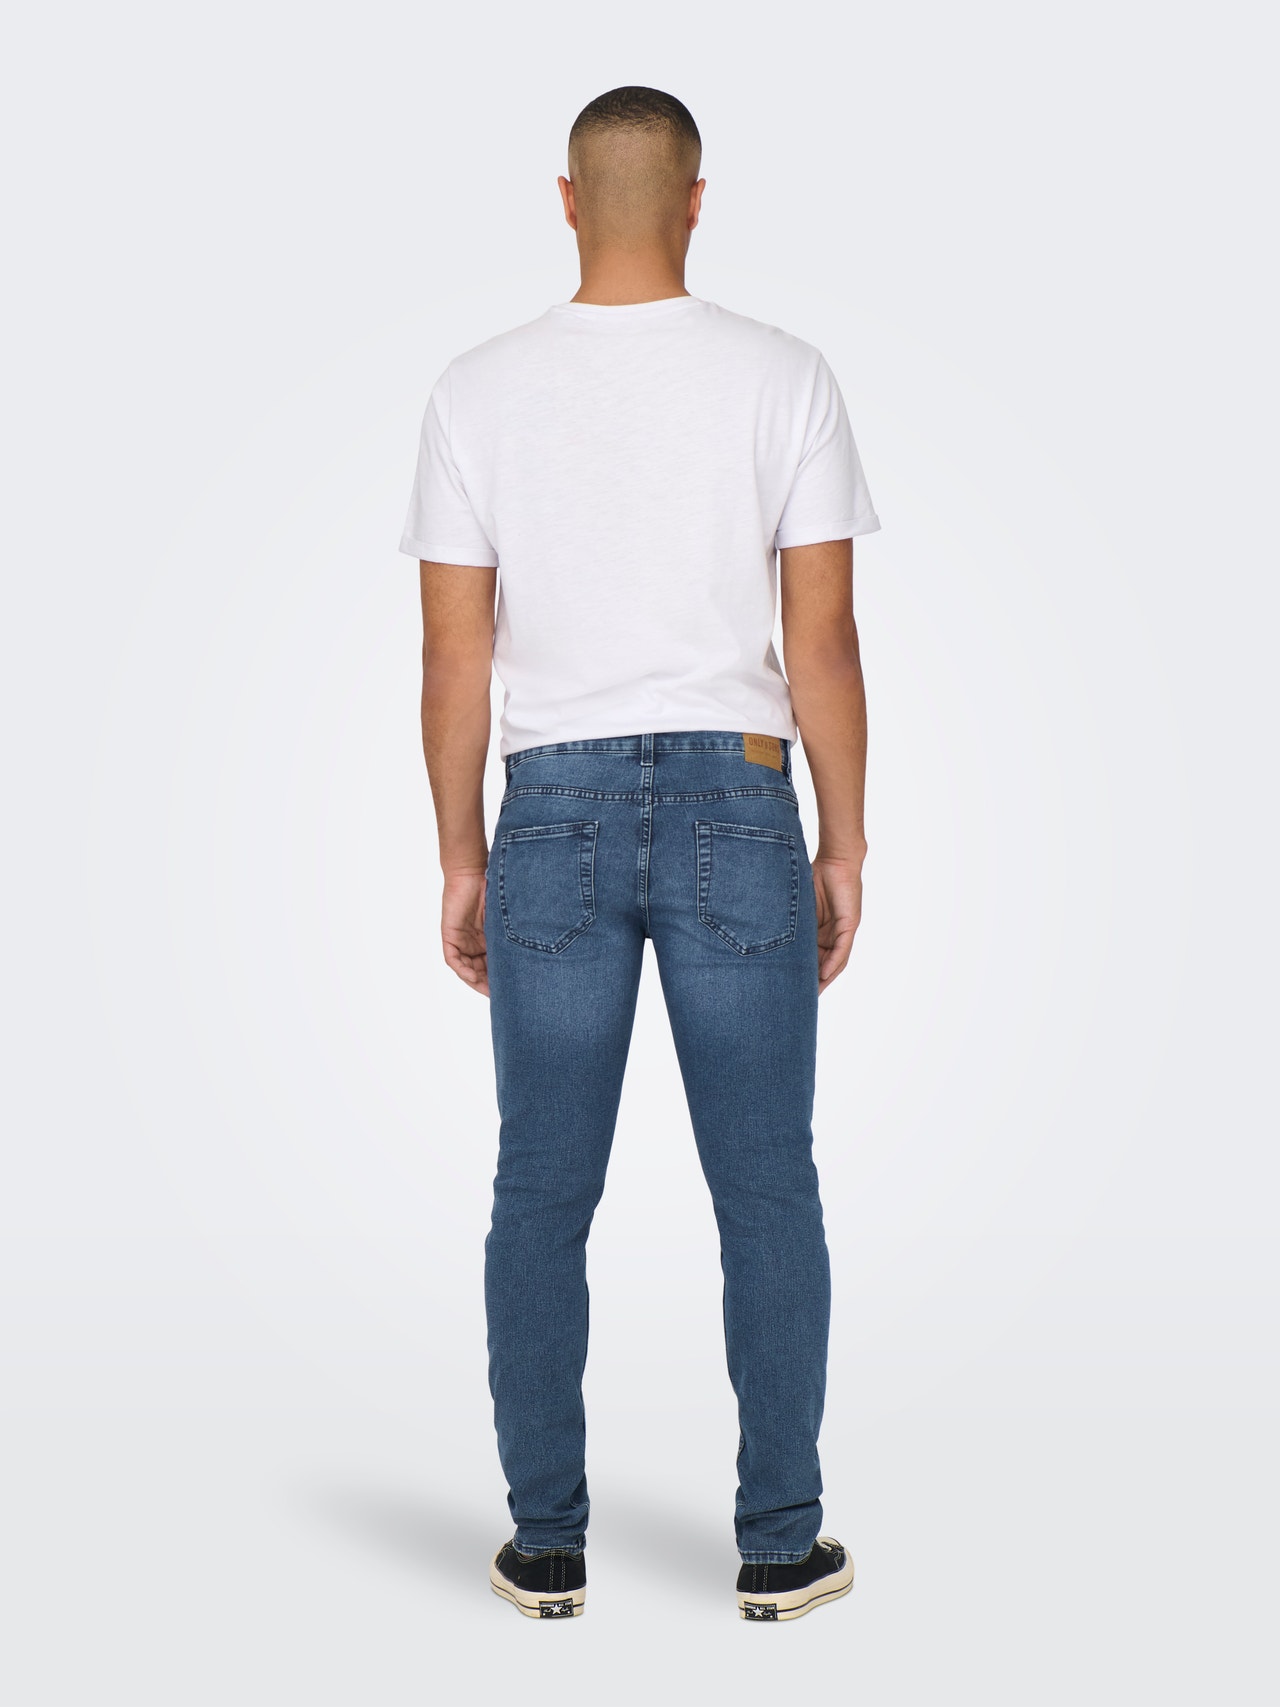 ONLY & SONS ONSWeft Regular Jeans -Light Medium Blue Denim - 22027900